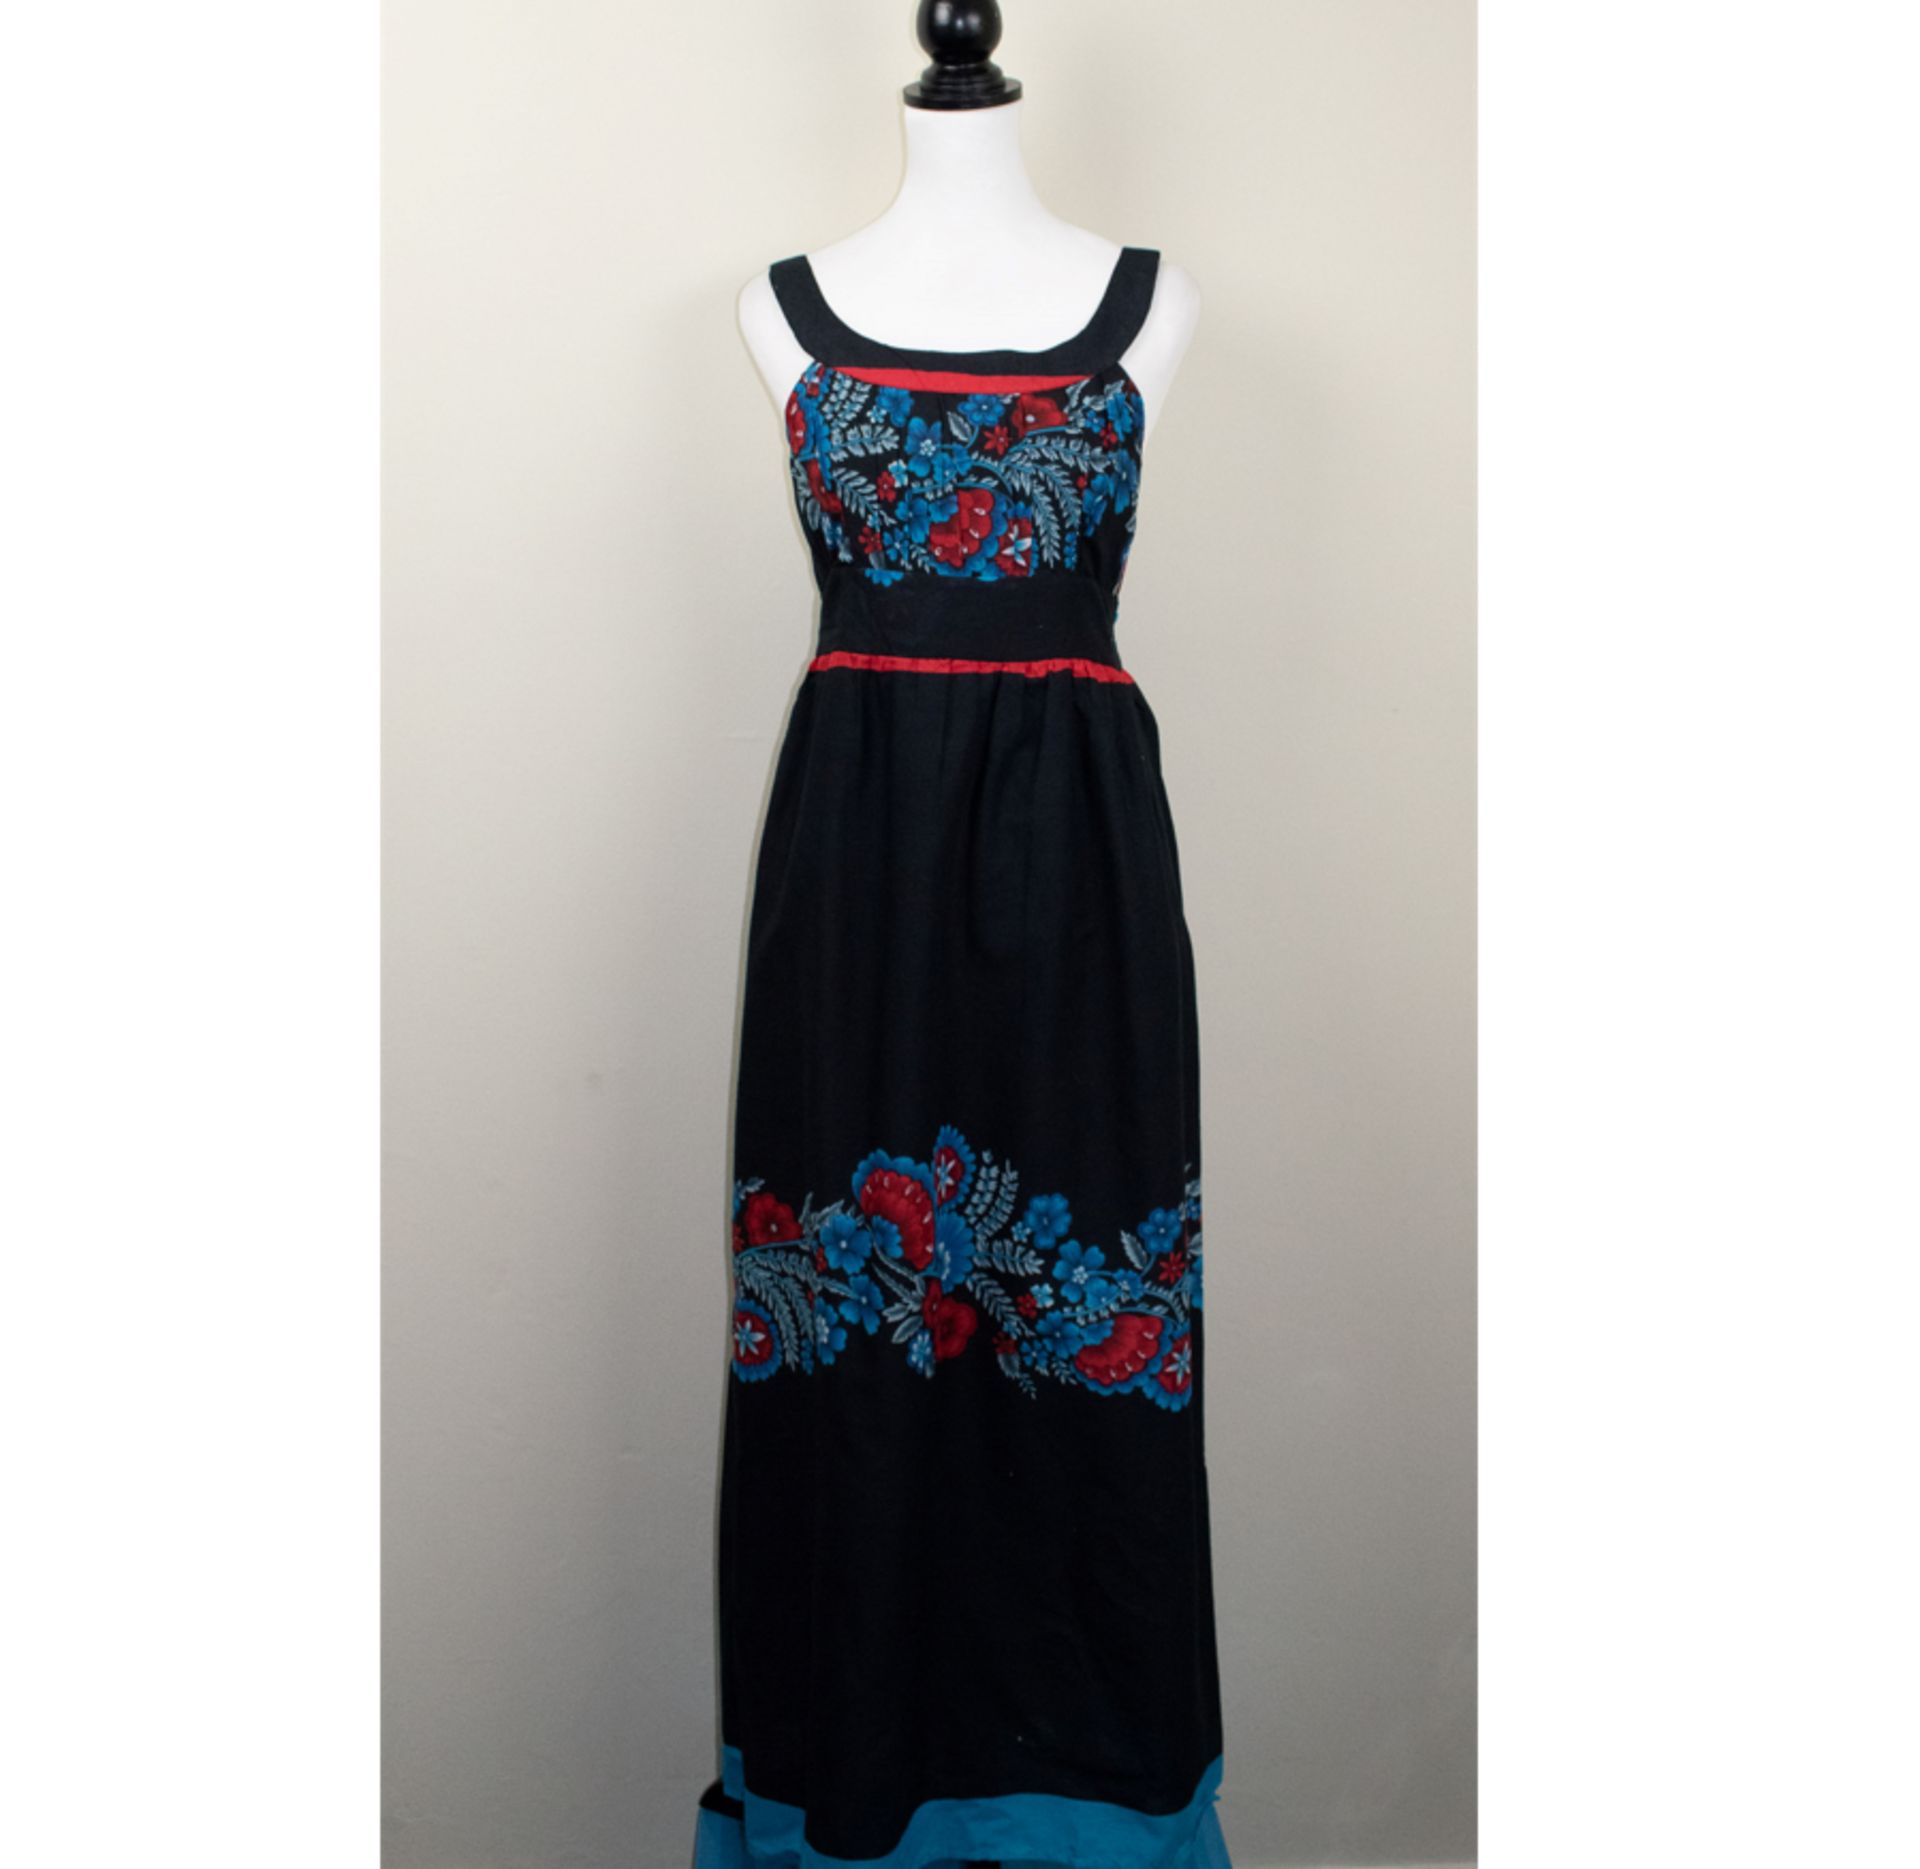 20 x New Women's Maxi & Midi Dresses Clothing Ladieswear Fashion Boho Spring / Summer Styles - Image 11 of 11